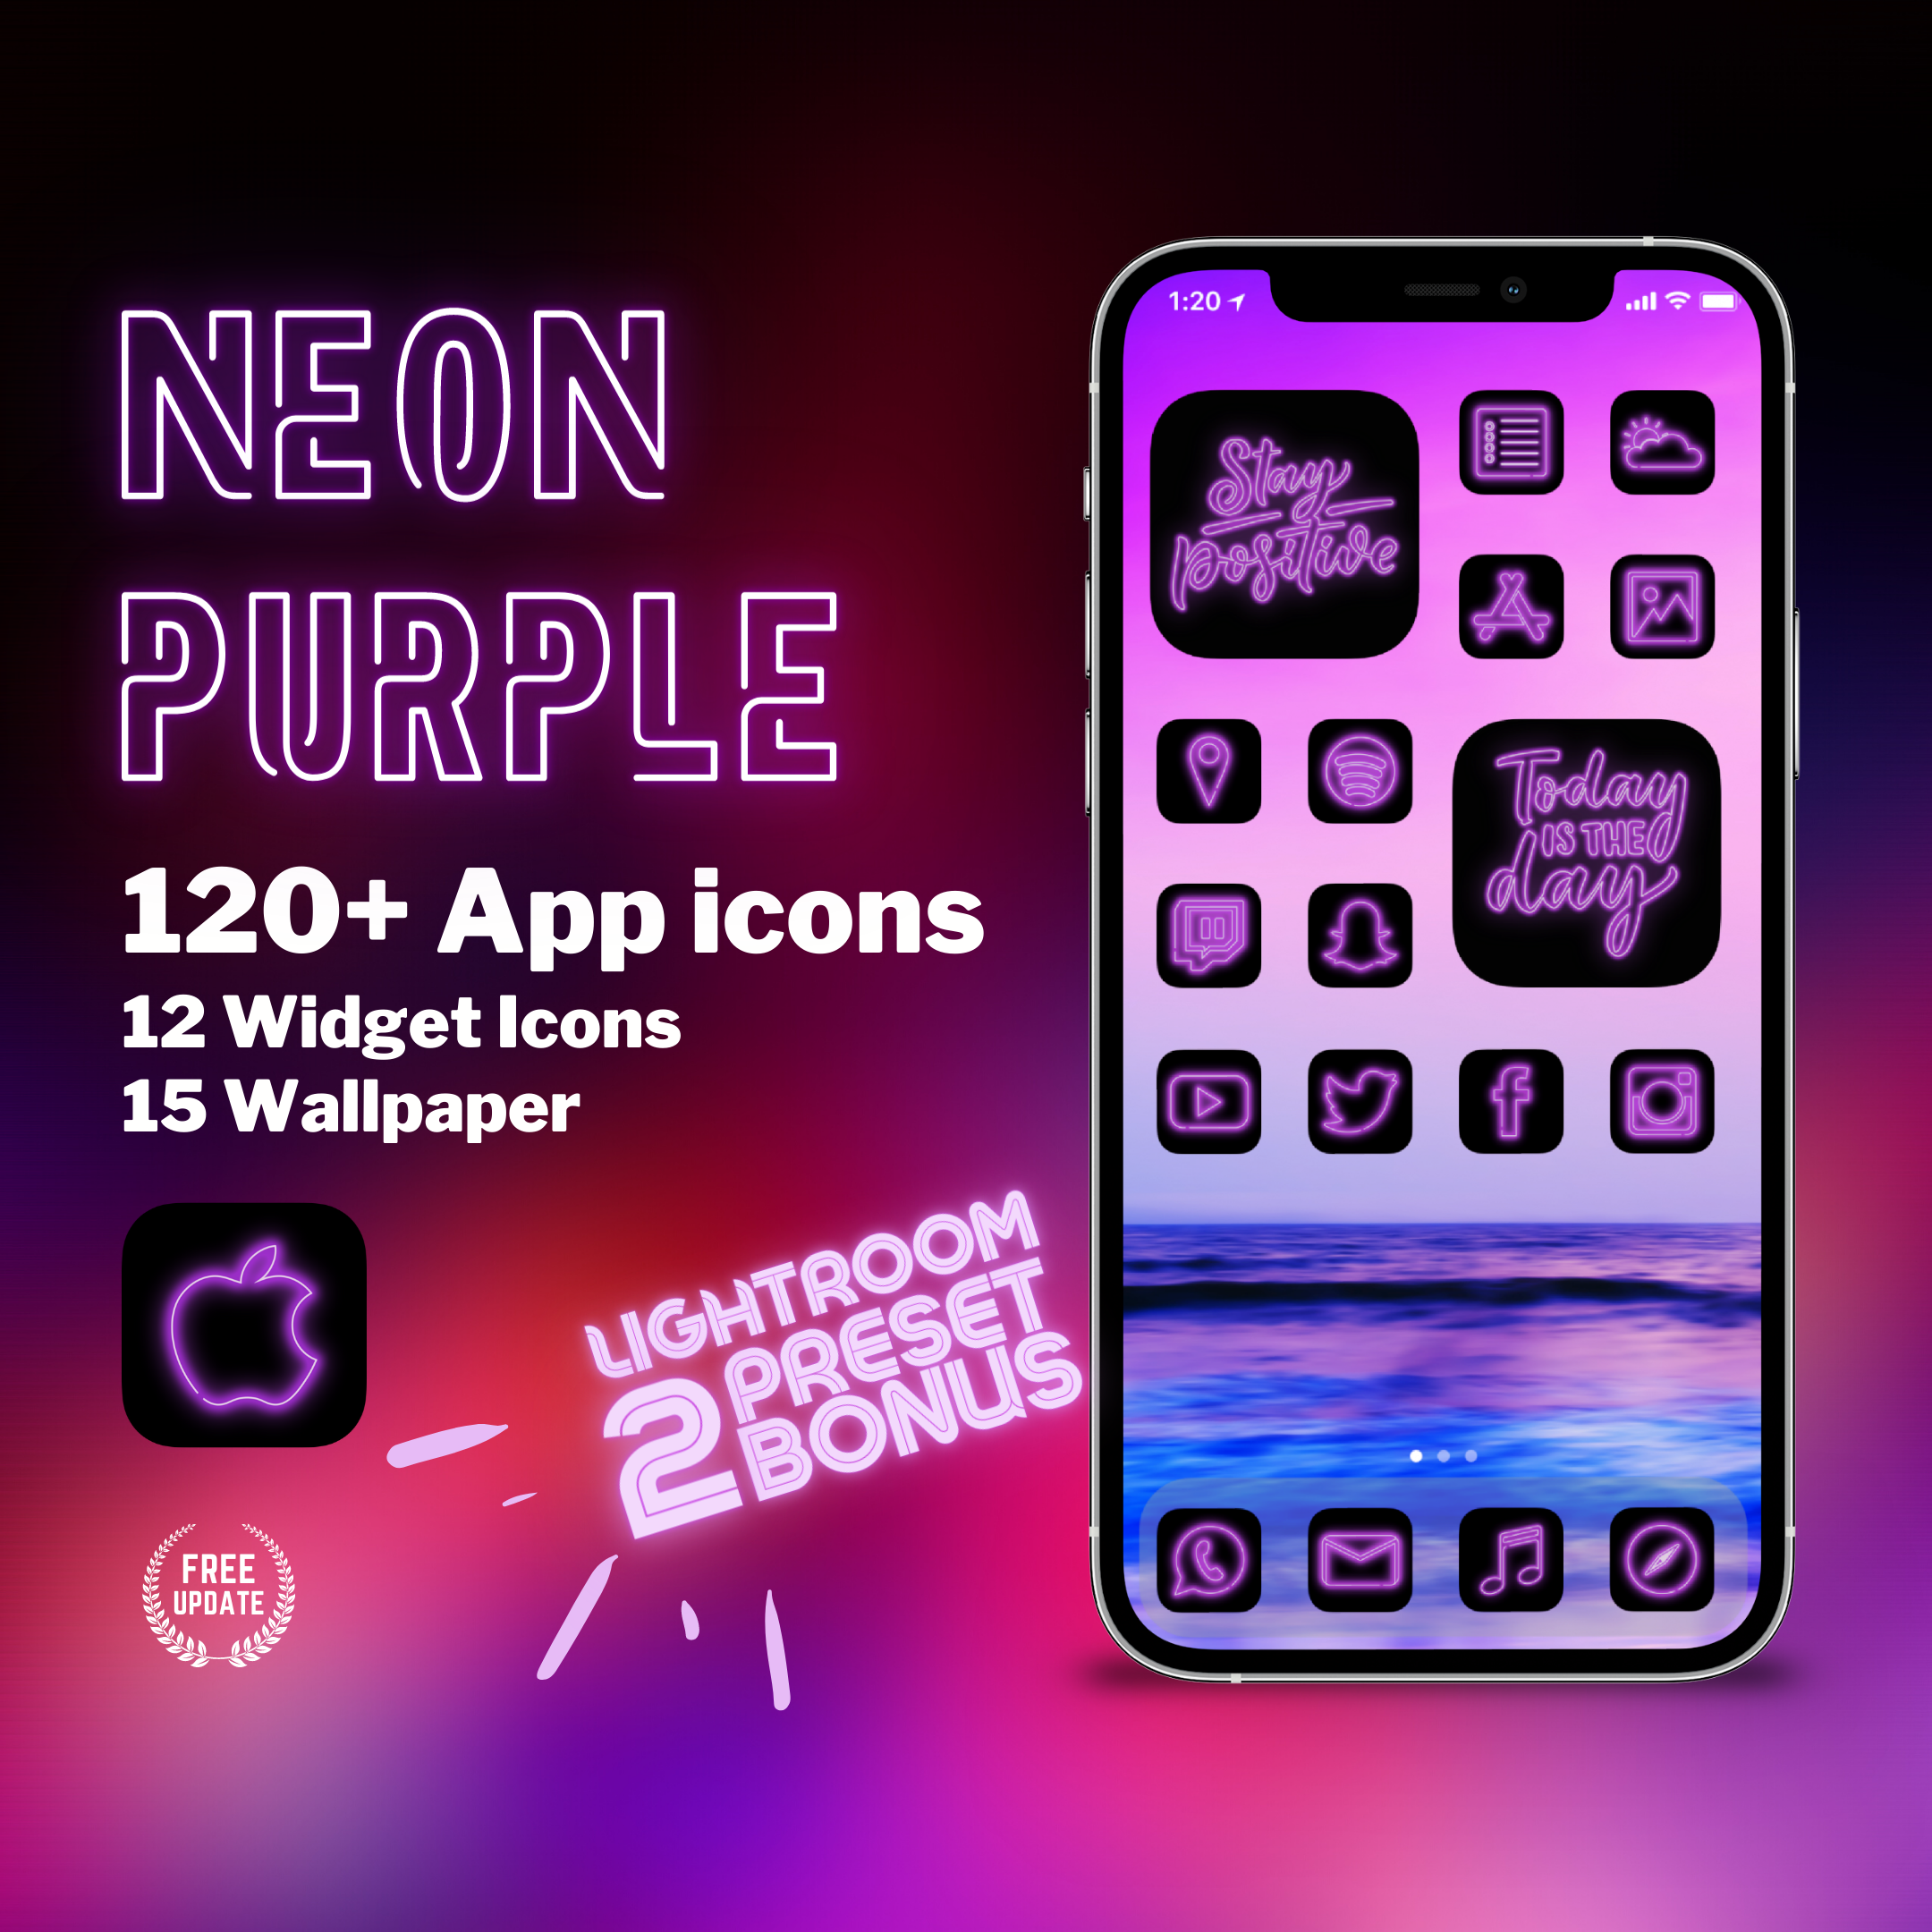 Download Free Purple Neon App Icons - Neon Aesthetic iOS Icons